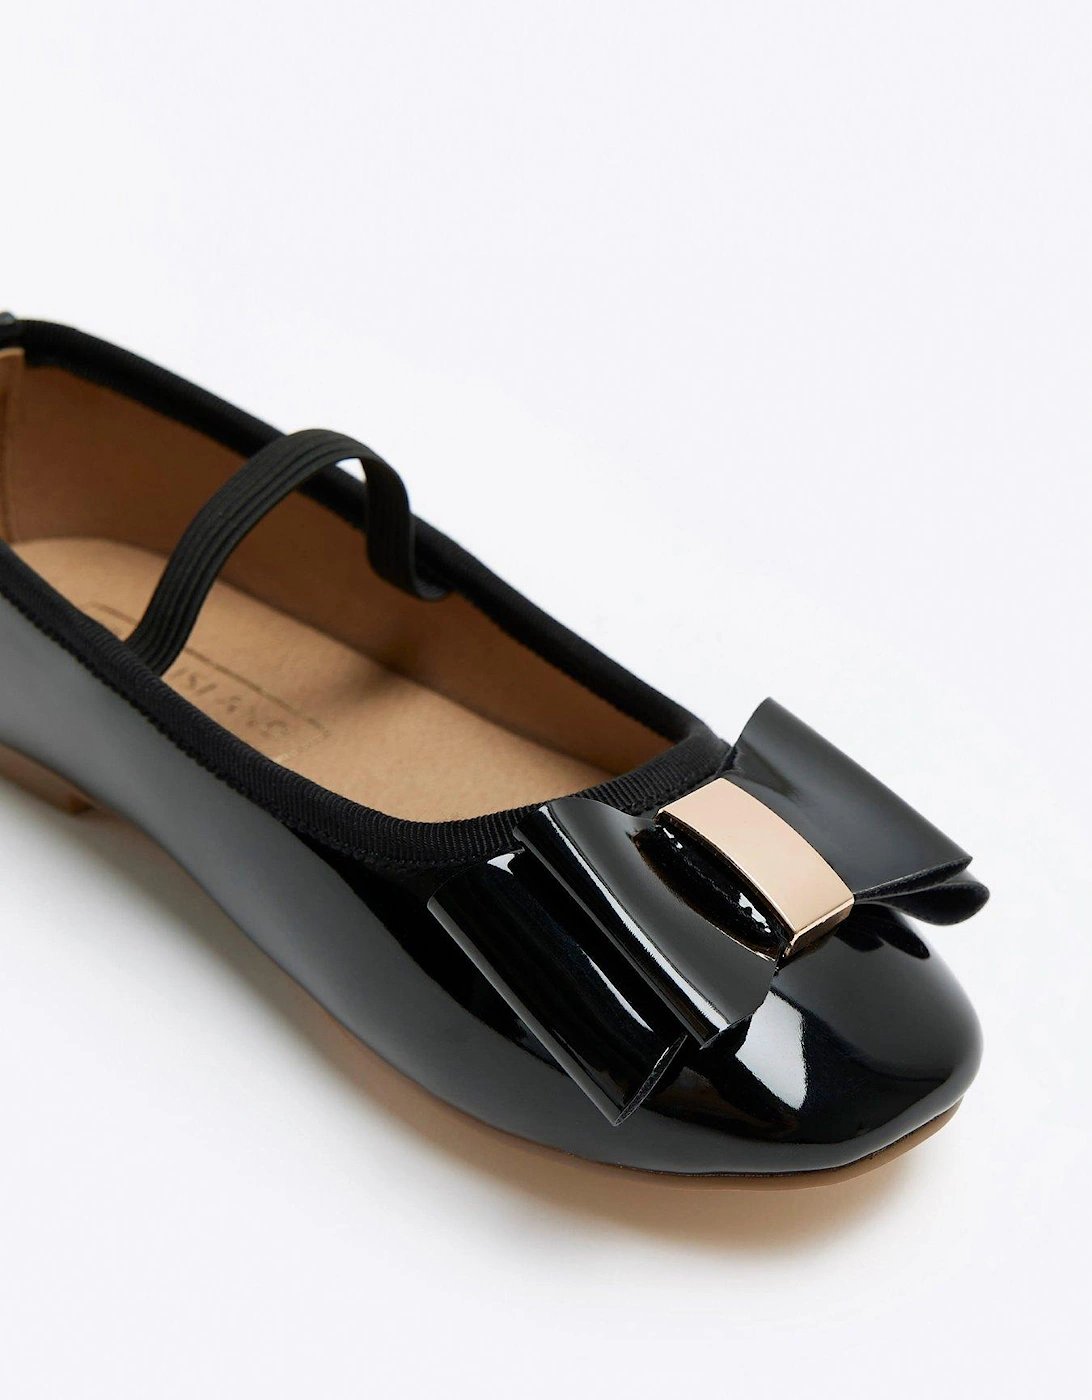 Girls Patent Bow Ballet Shoes - Black